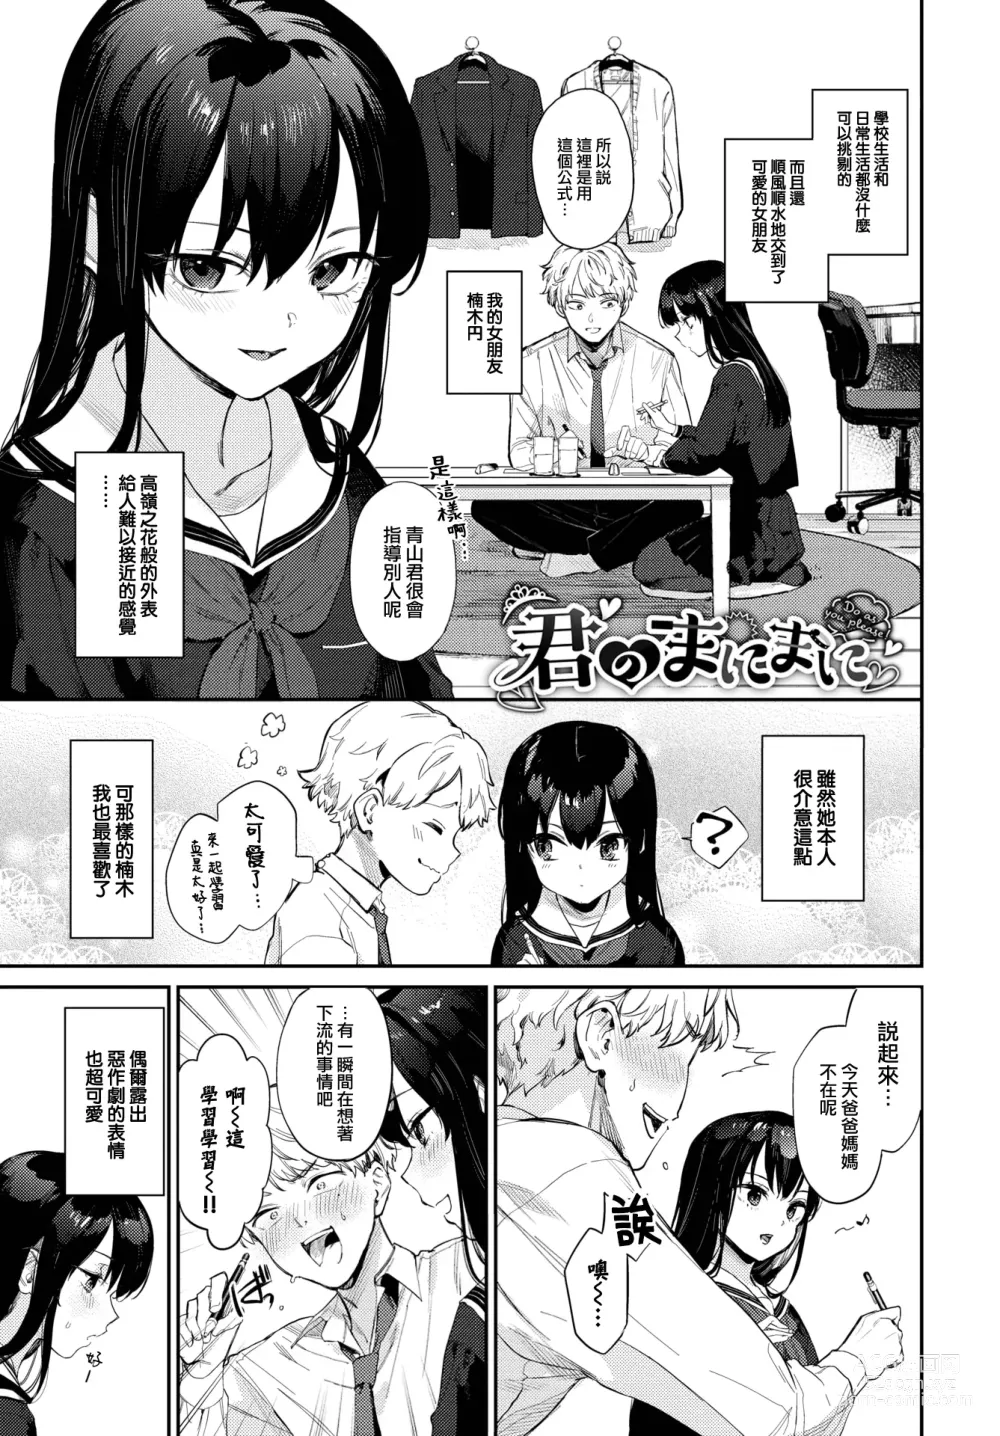 Page 4 of manga Muttsuri Bloom